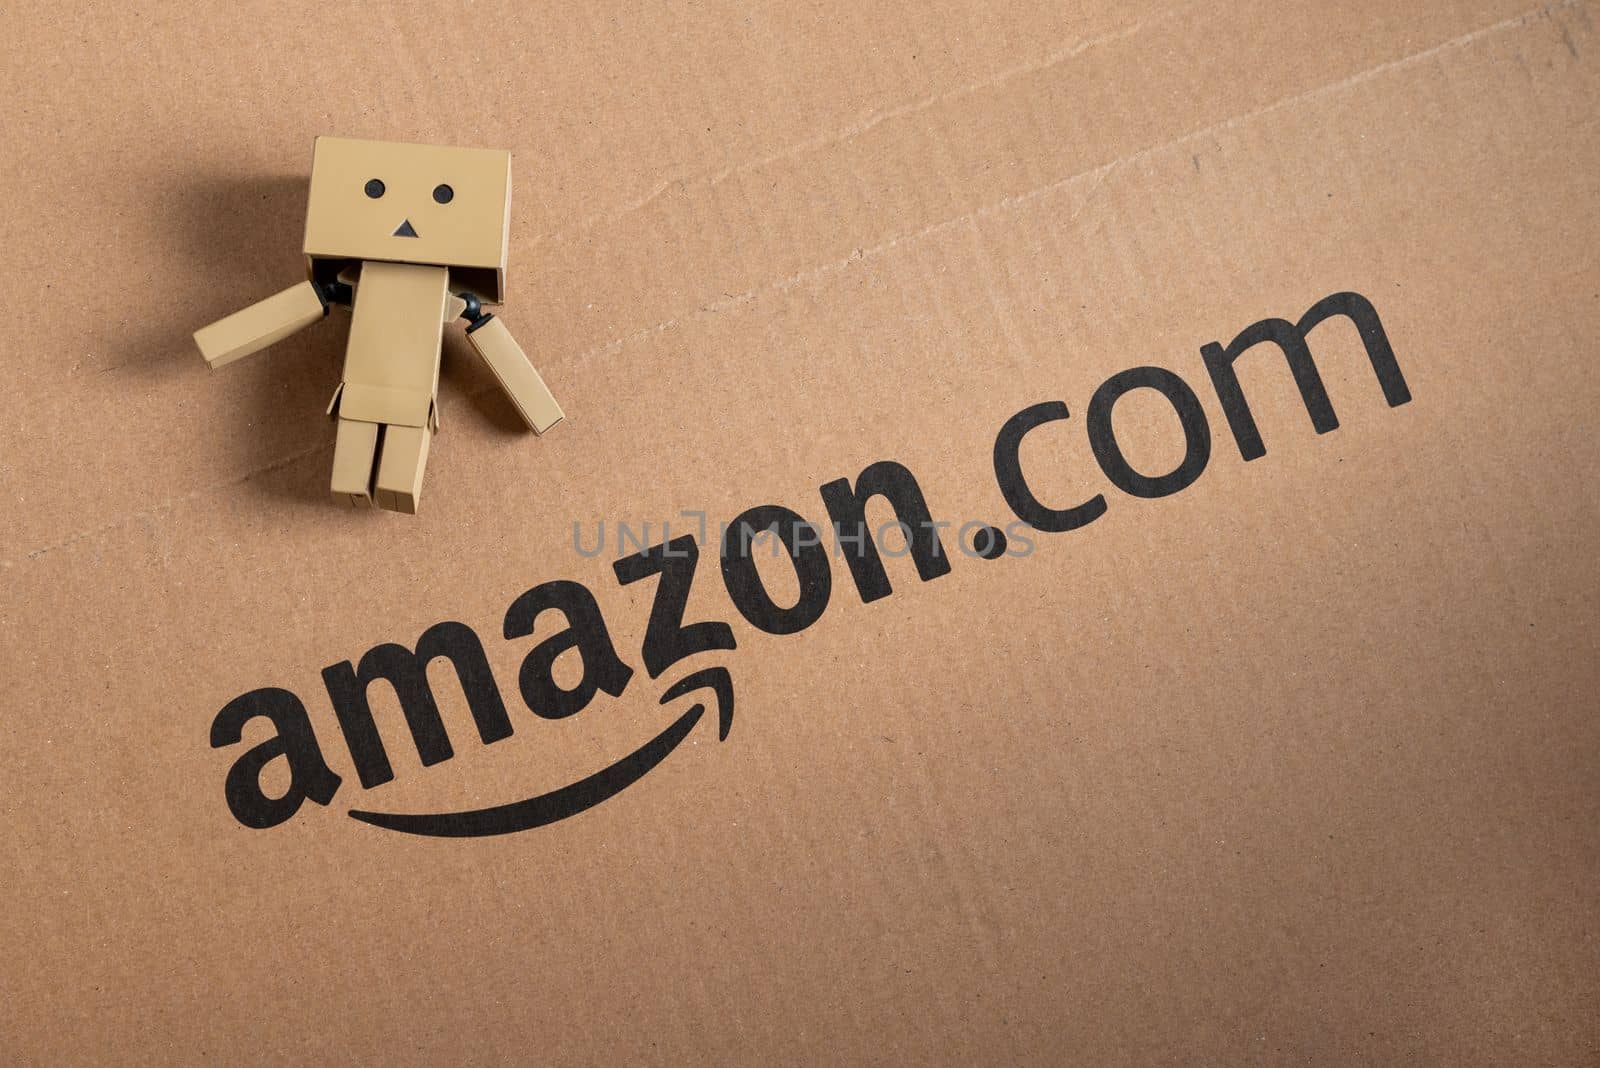 Antalya, Turkey - January 01, 2023: The logo of Amazon, a worldwide e-commerce company, printed on a Recycled cardboard box